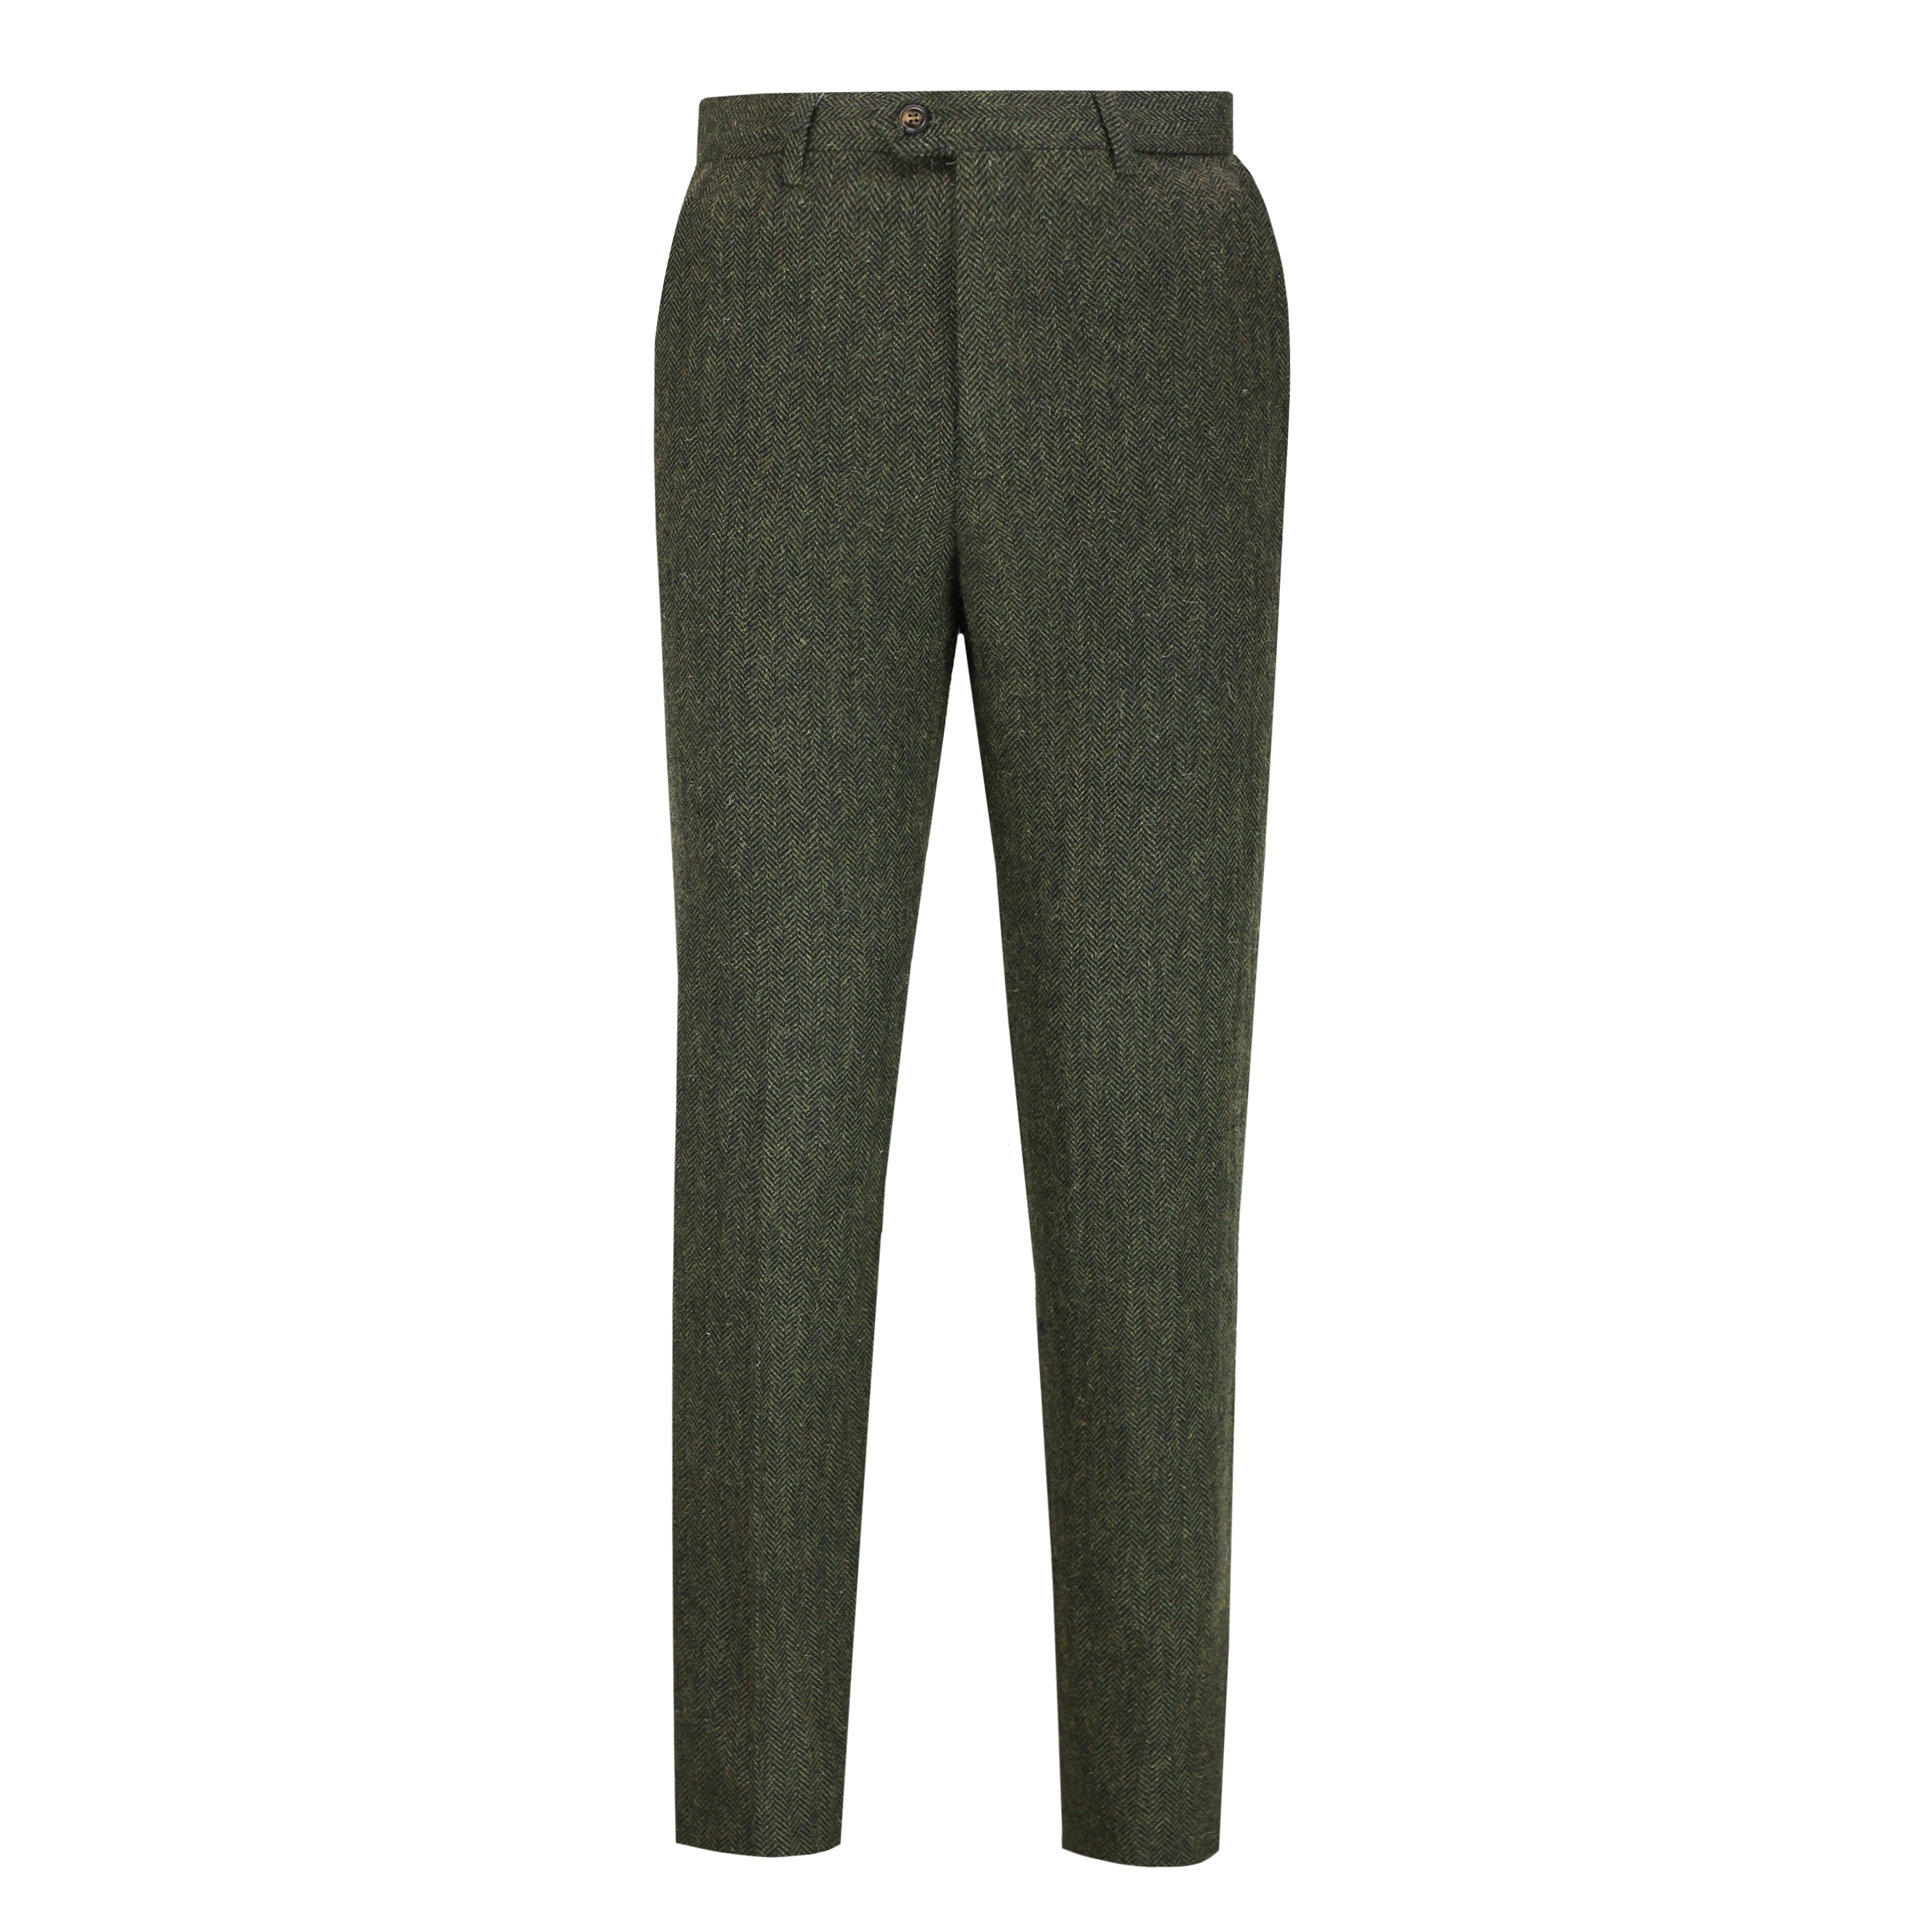 Edward - Mens Olive Green Herringbone 1920s Tailored Fit Suit Pants